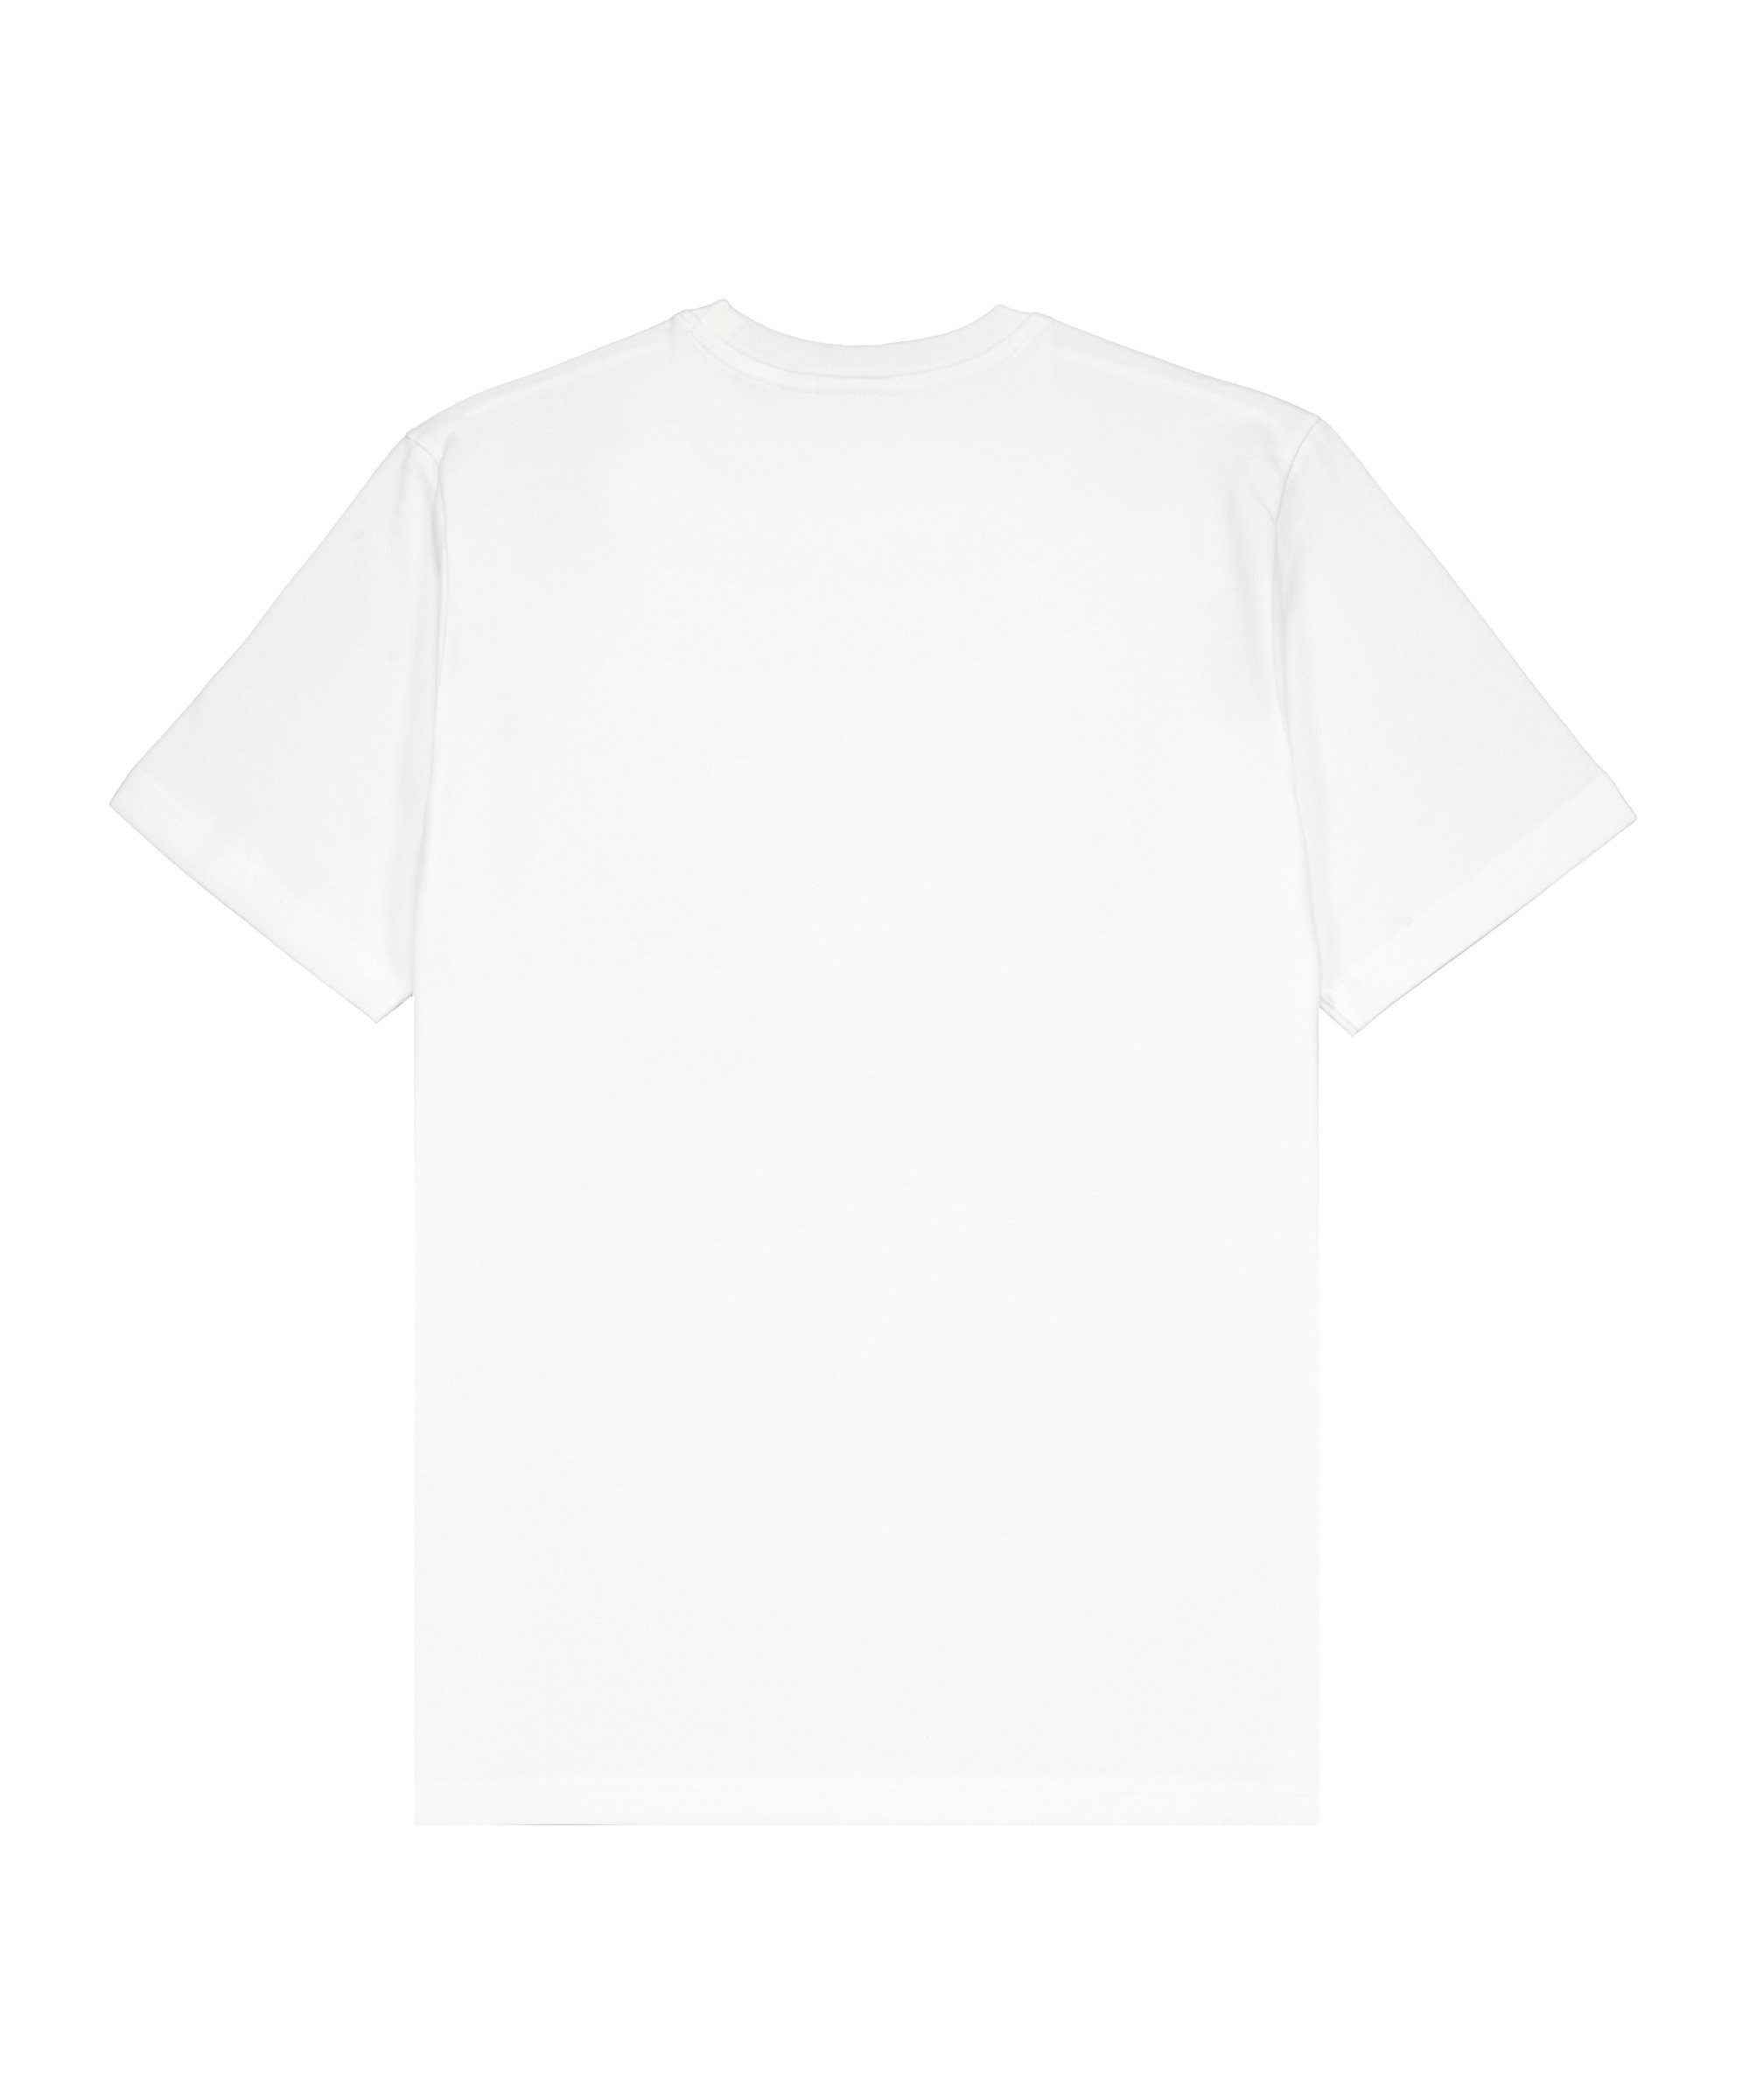 Originals adidas T-Shirt ADV default T-Shirt